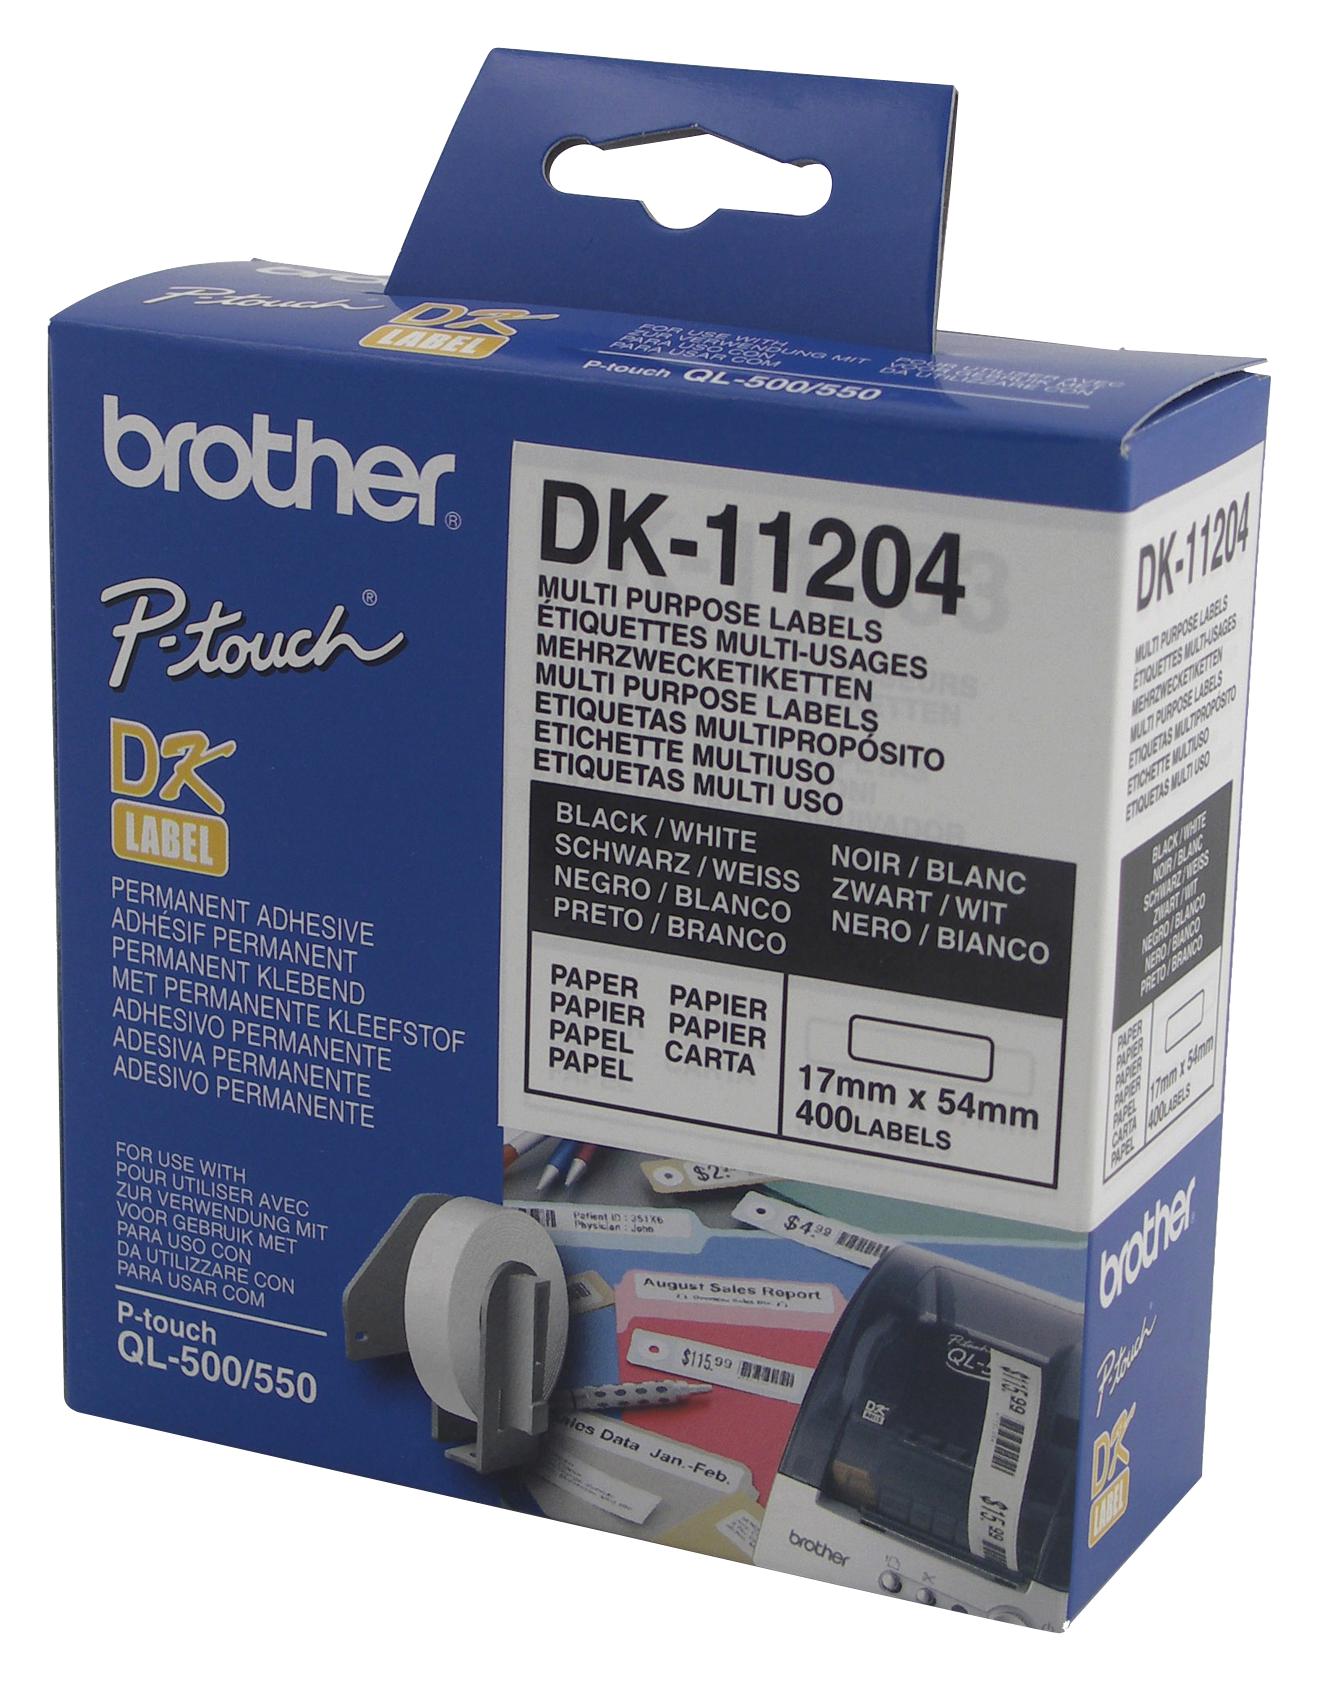 Brother Dk11204 Label, Multi Purpose